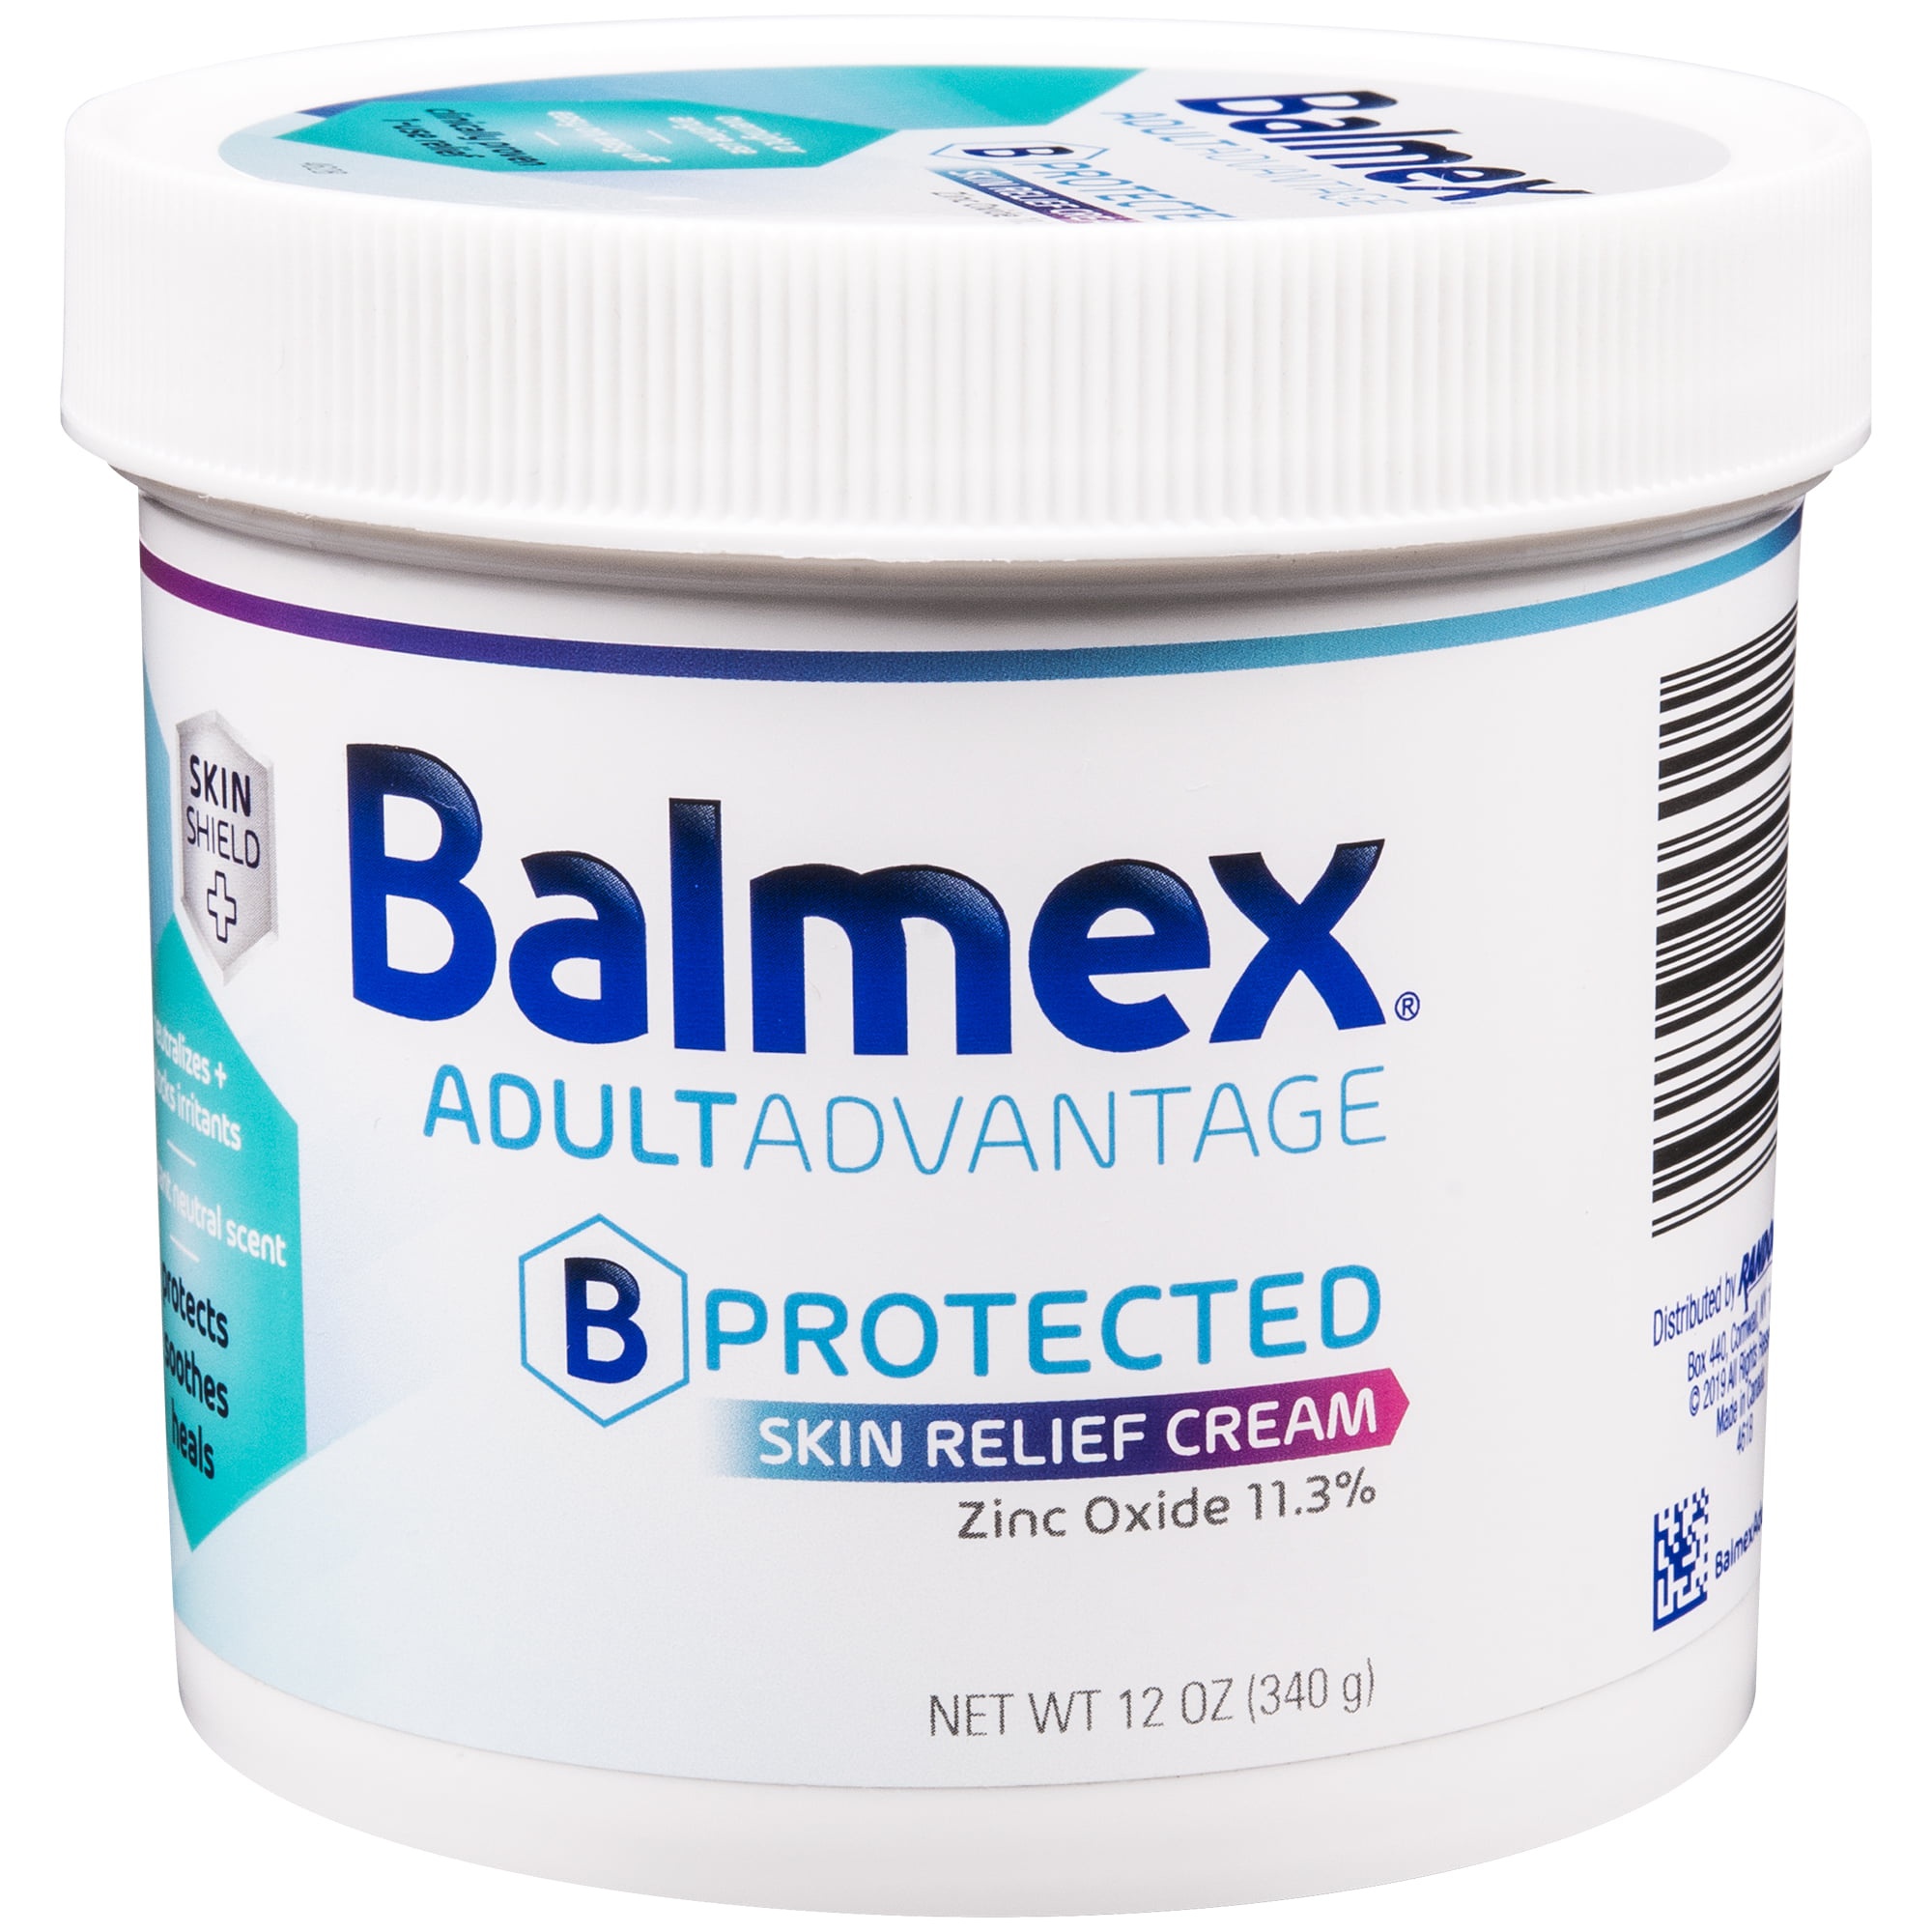 Balmex Adult Advantage B Protected Skin Relief Cream